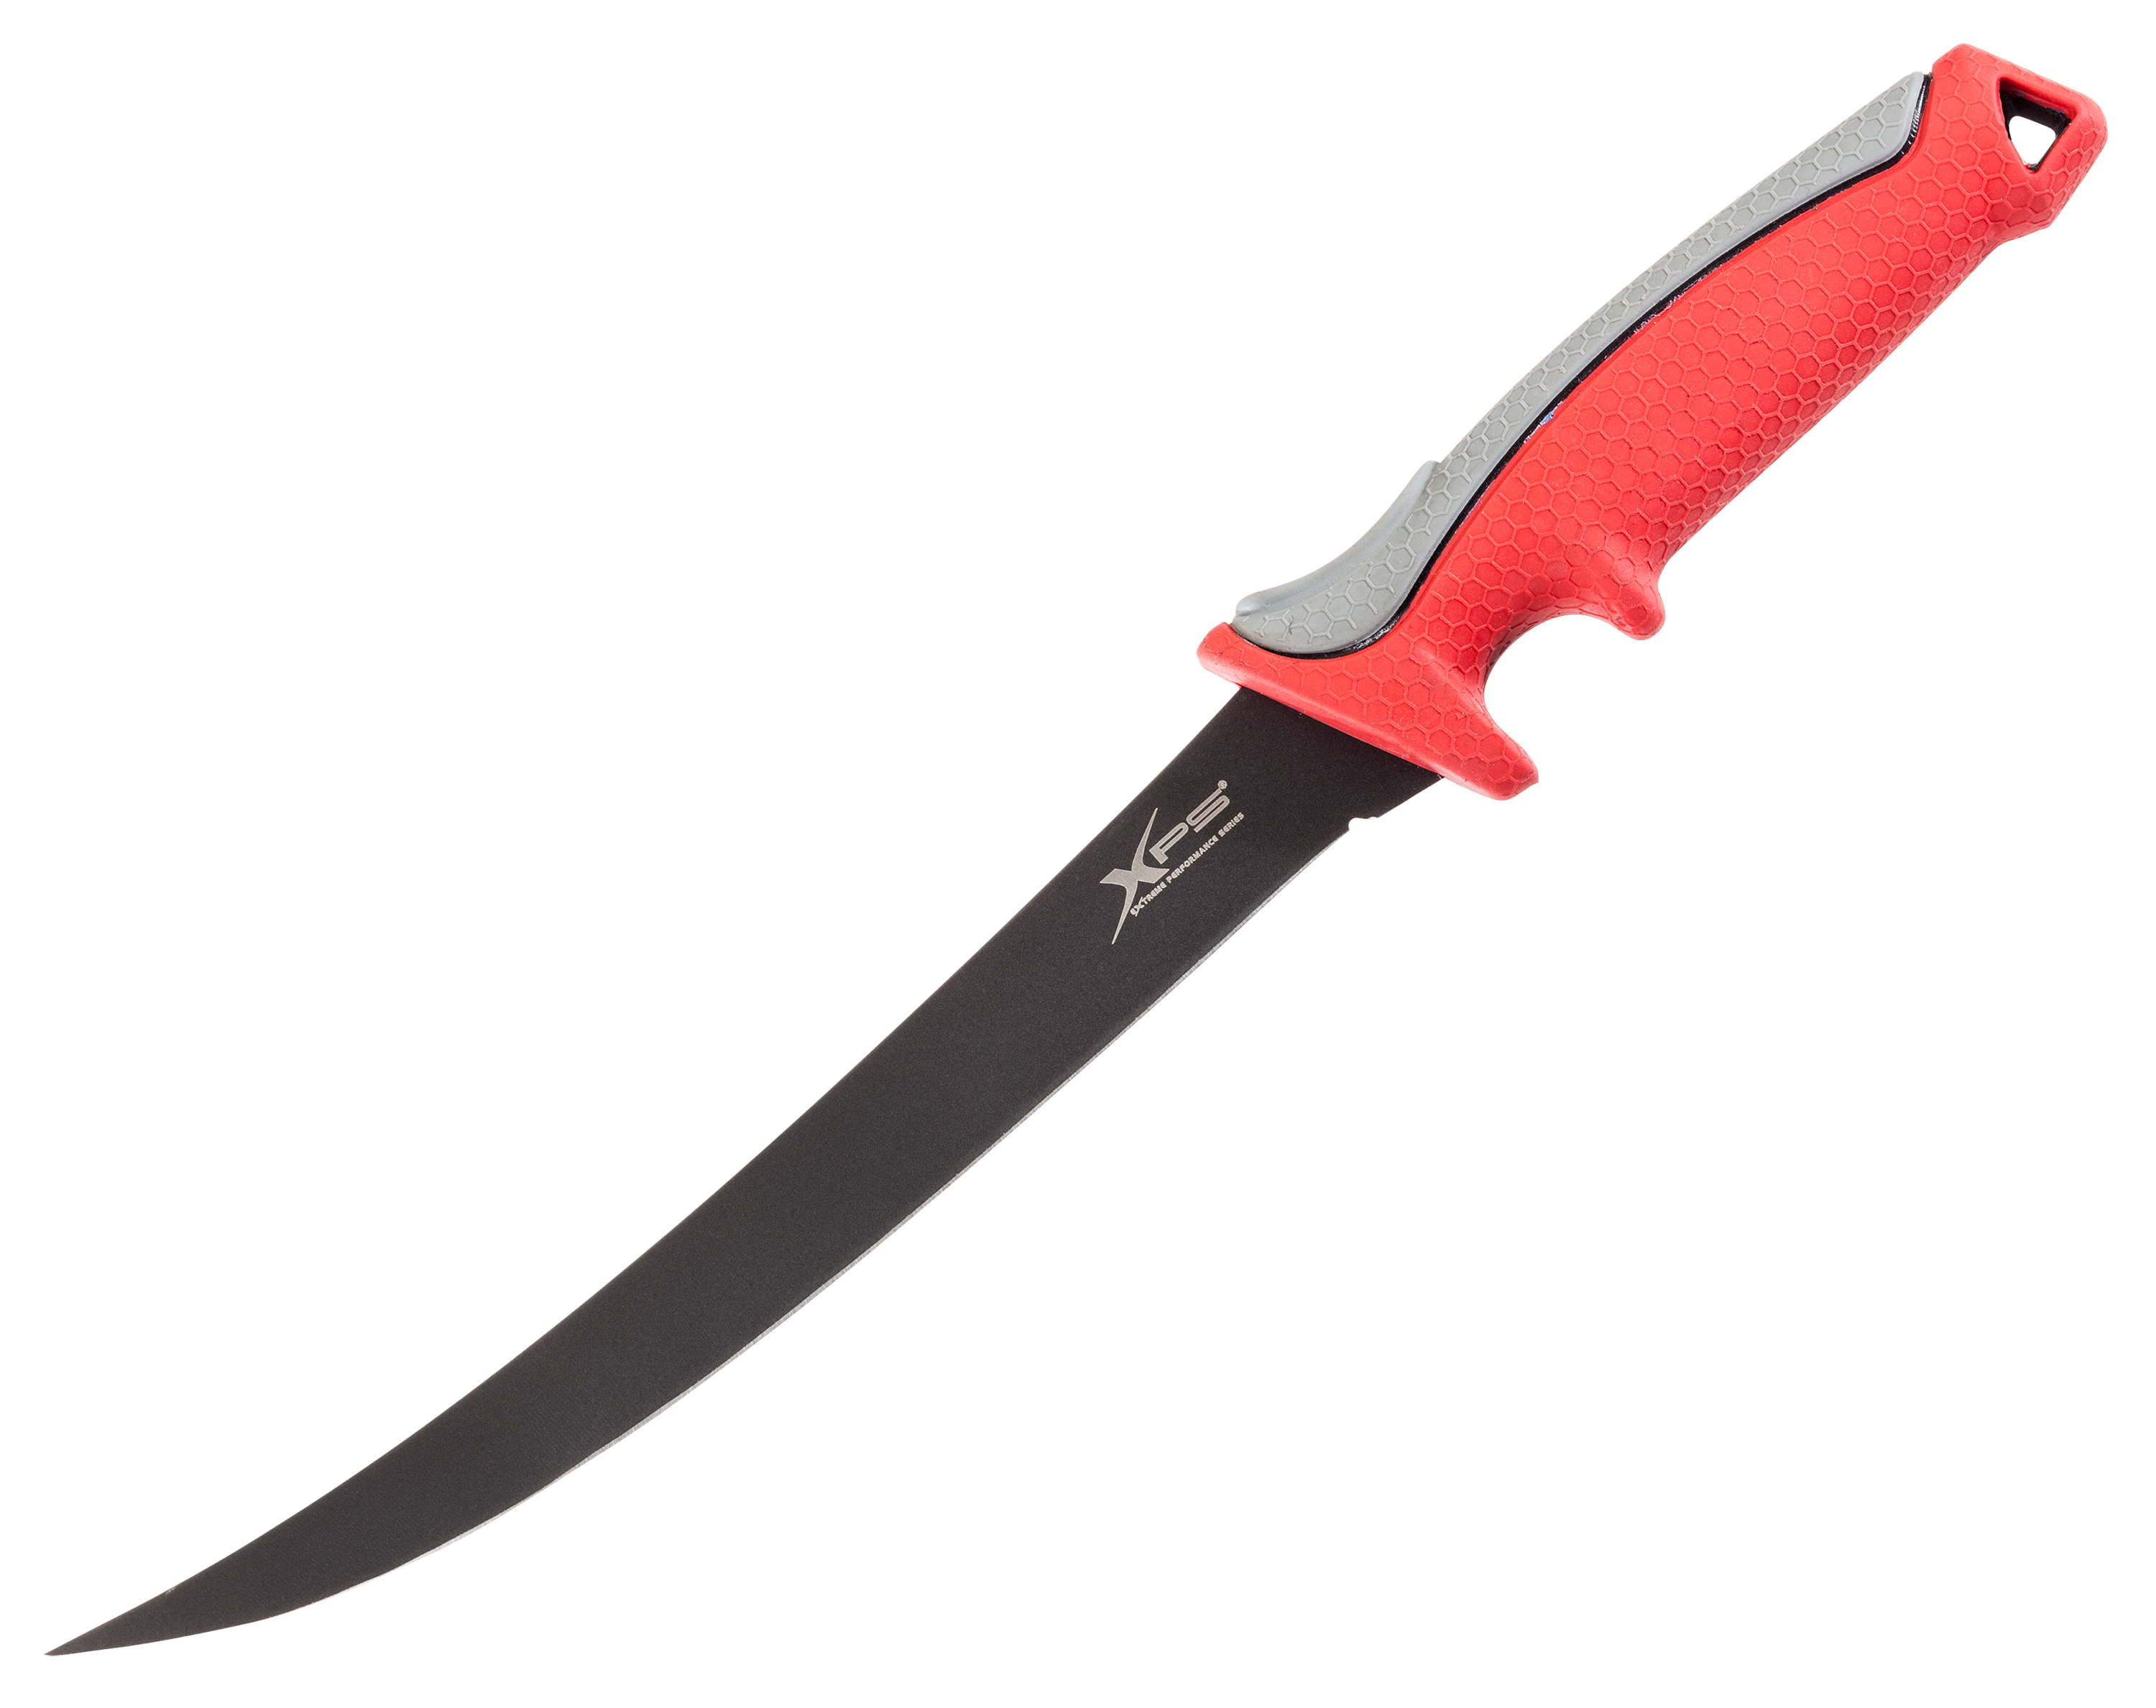 Bass Pro Shops XPS Professional-Grade Fillet Knife - Red/Gray - 9